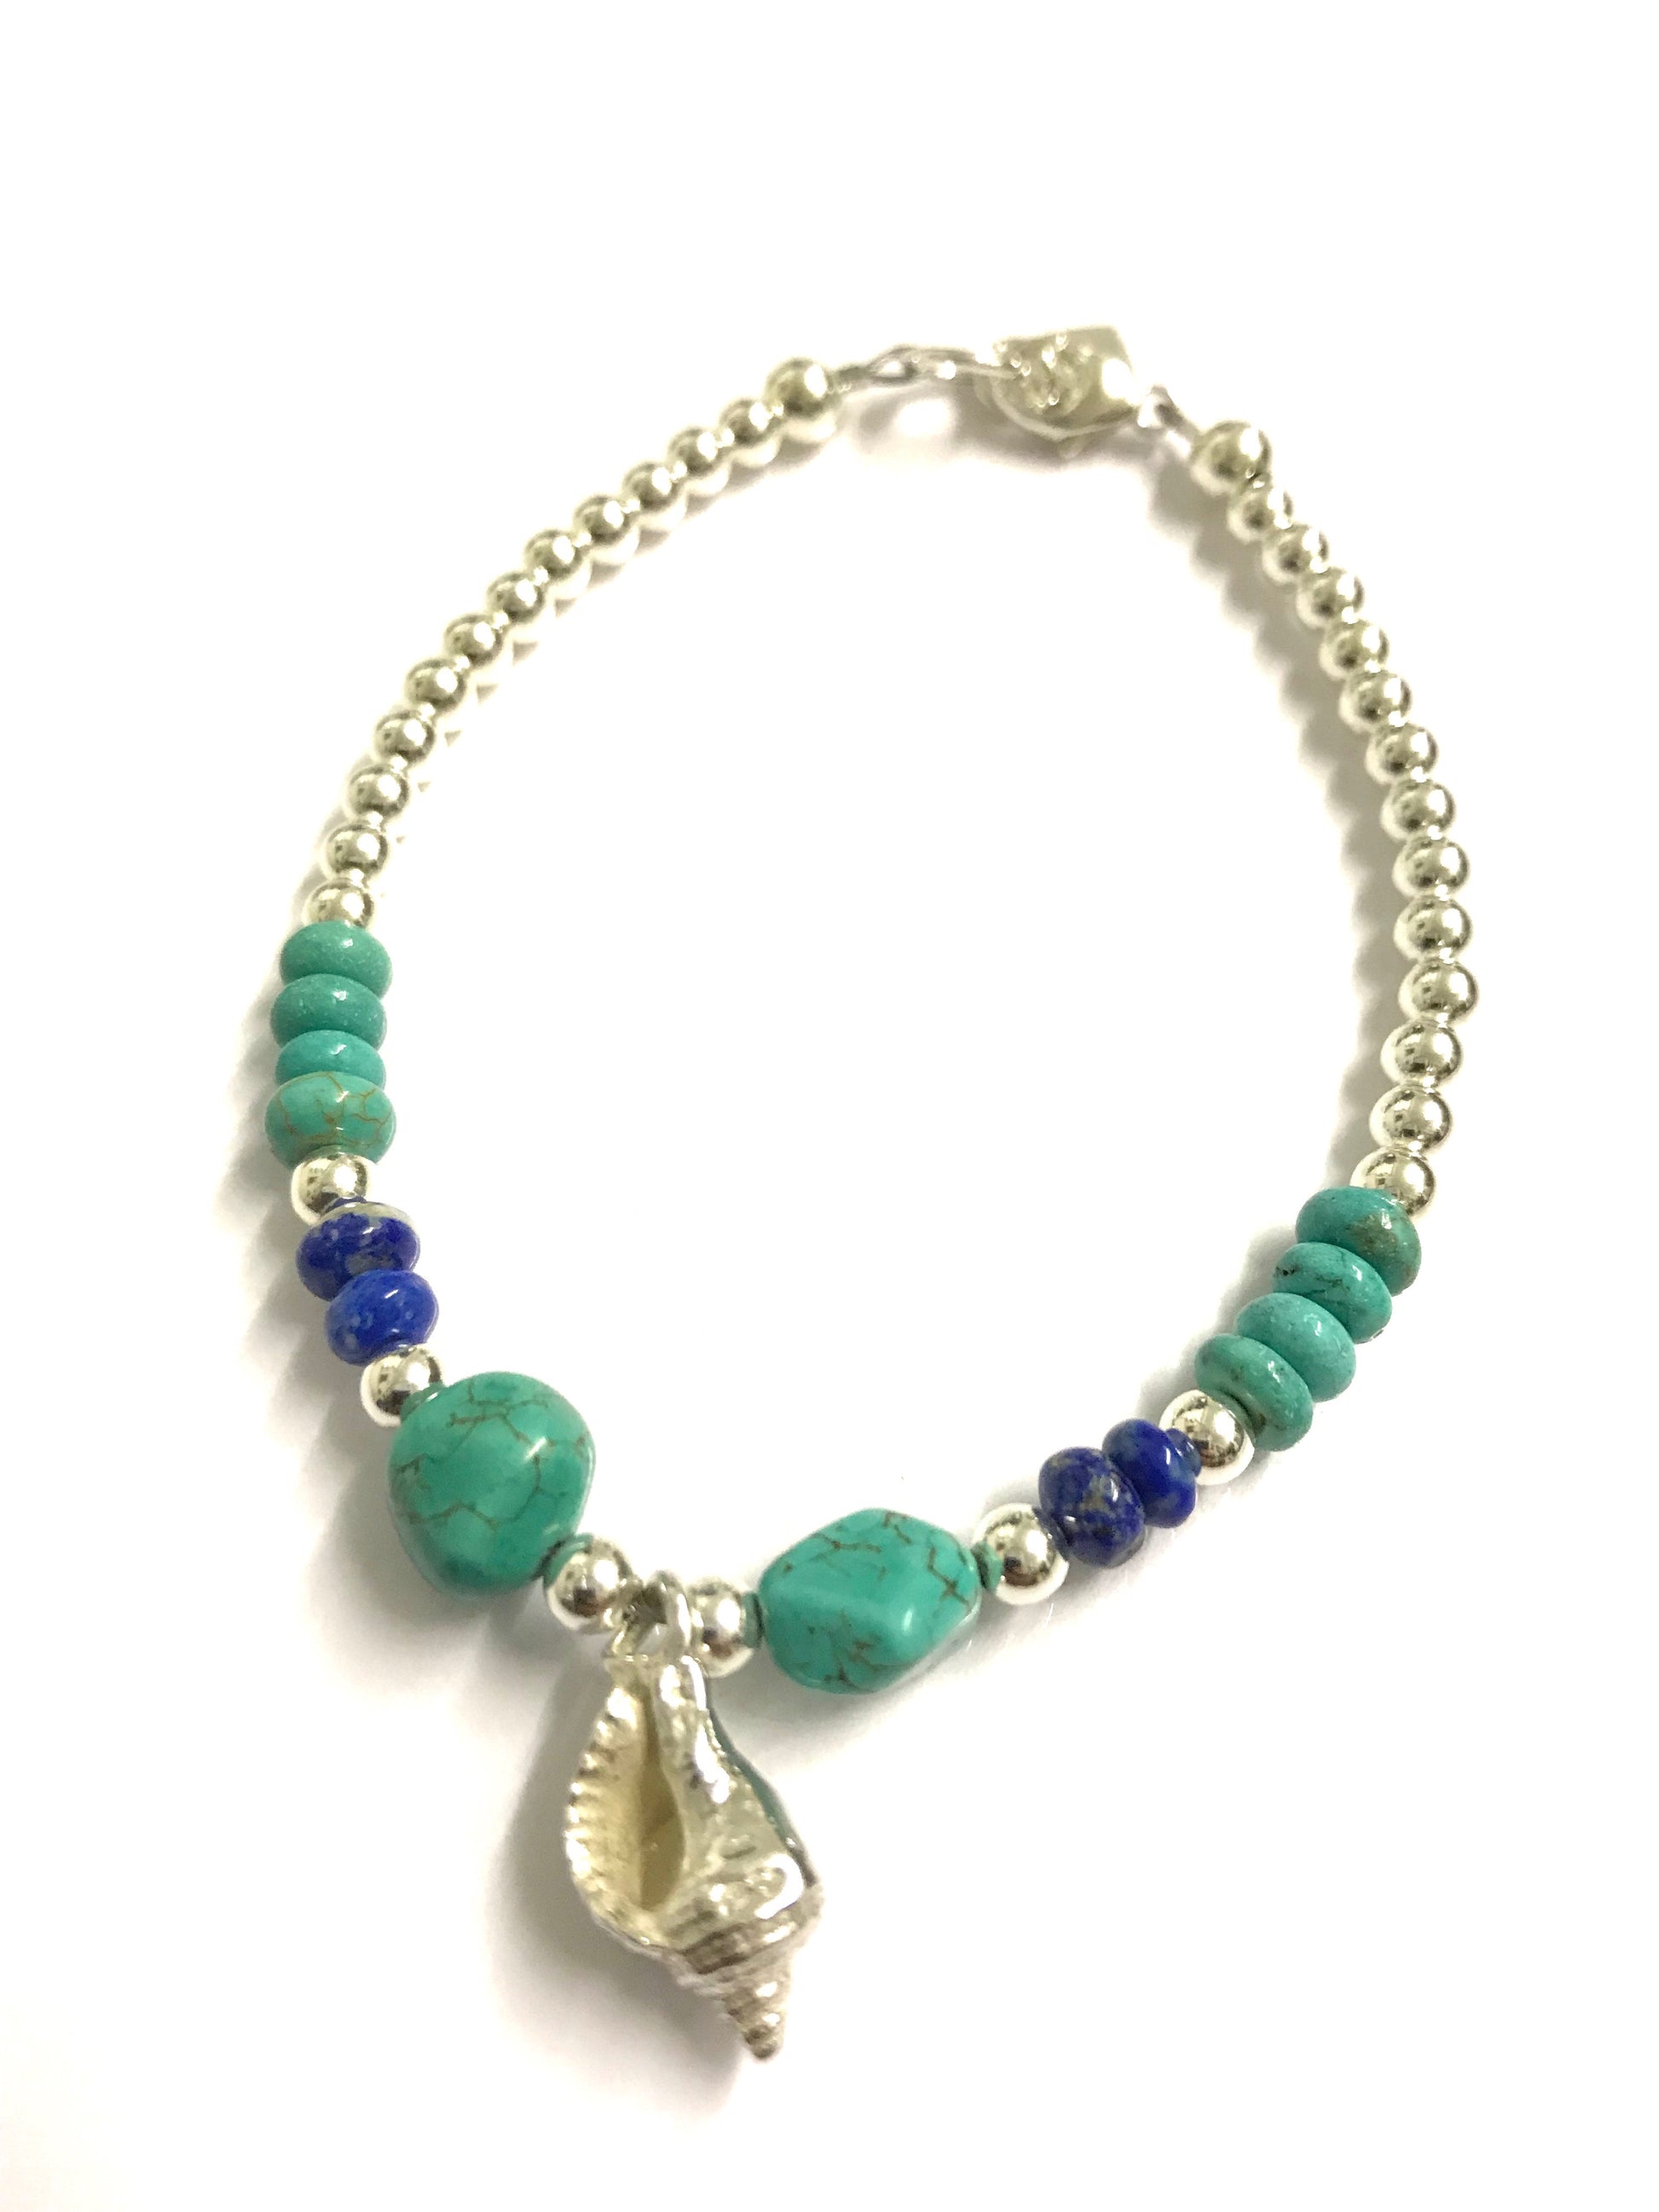 Whelk shell bracelet with turquoise